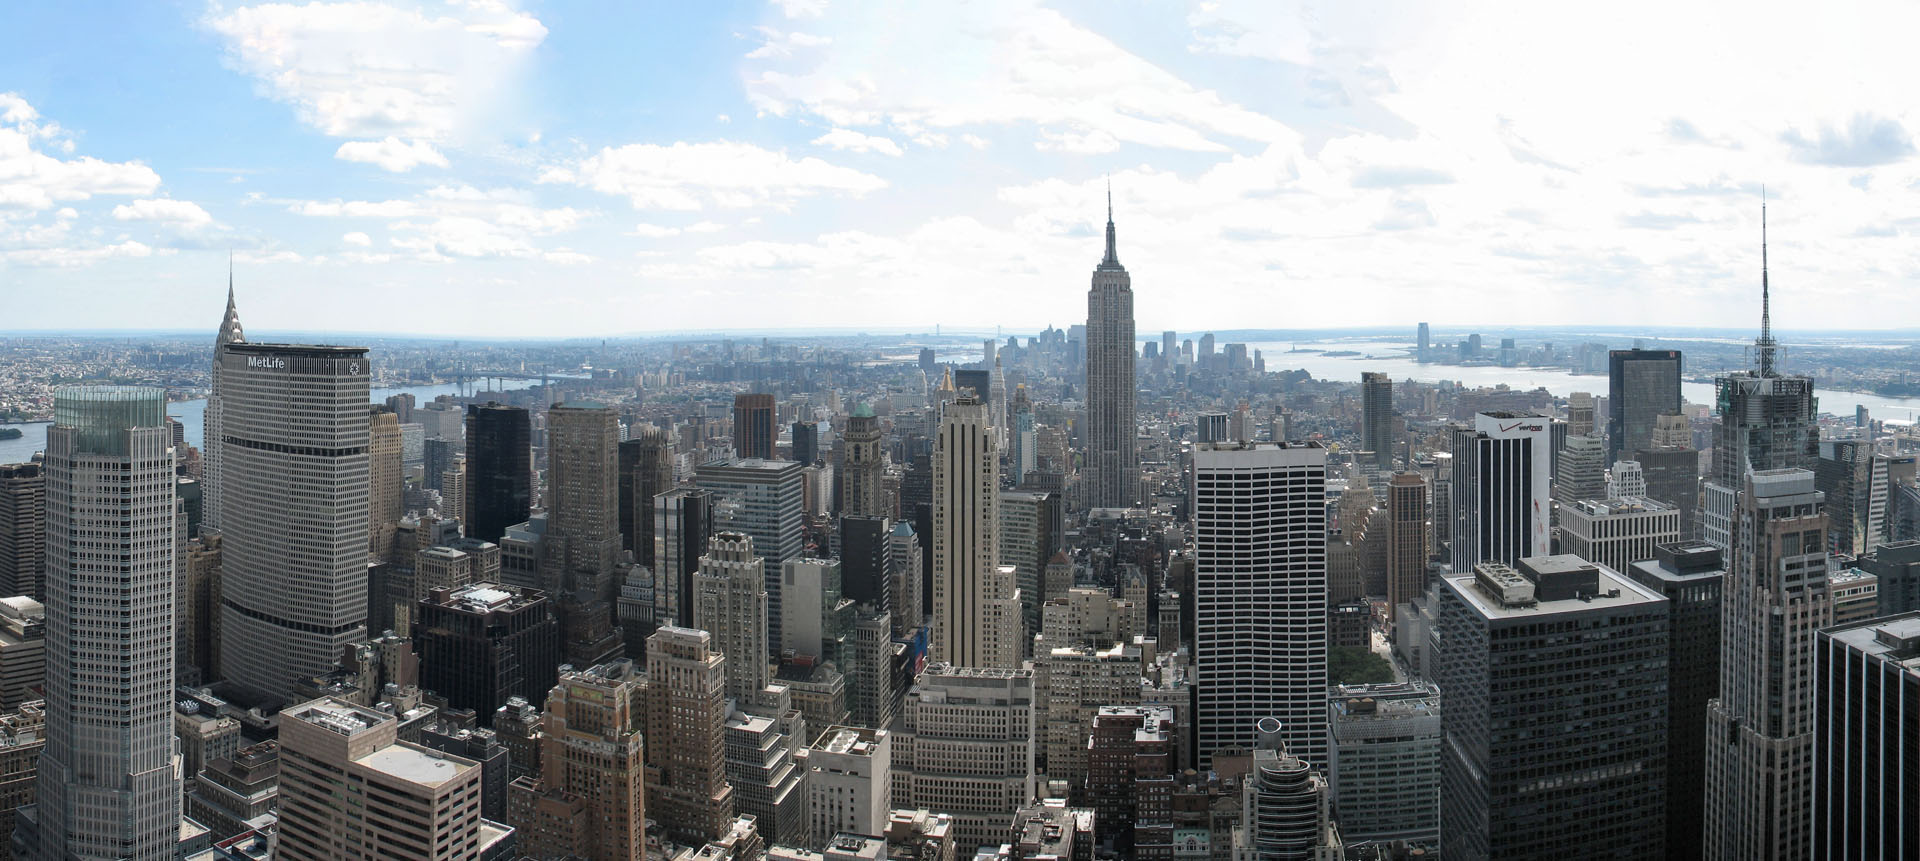 Panoramablick vom Rockefeller Center (Top of the Rock) über Manhattan